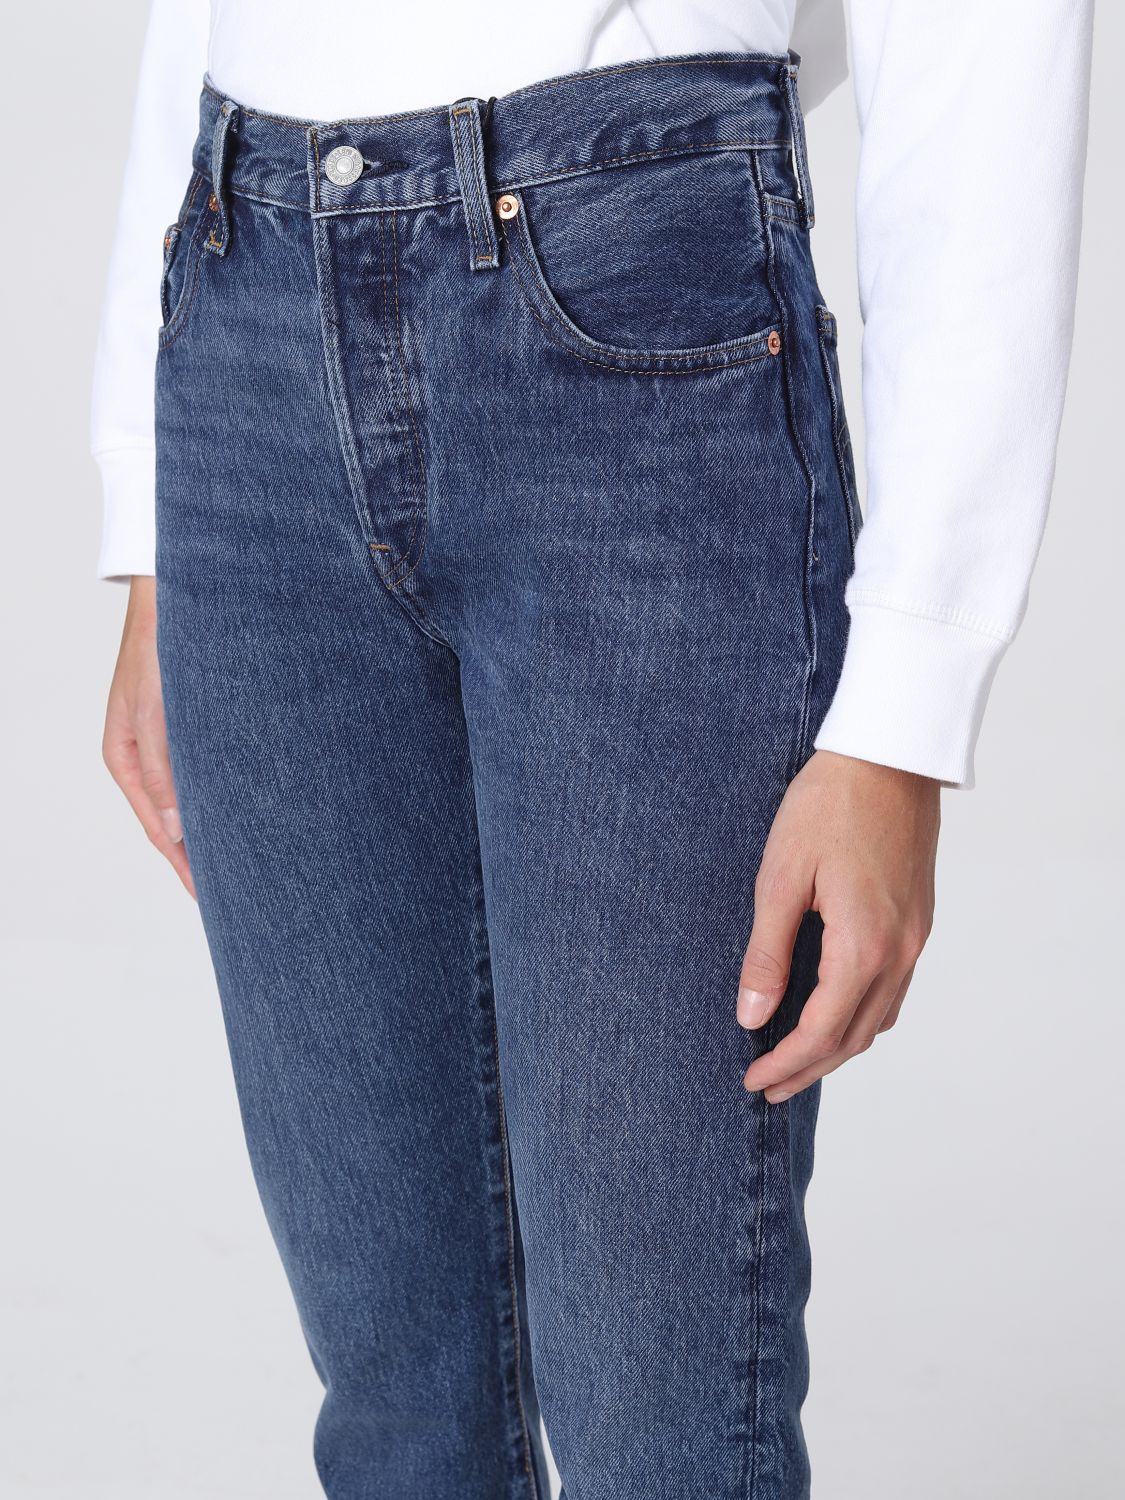 LEVI'S: jeans for woman - Denim | Levi's jeans 362000224 online on ...